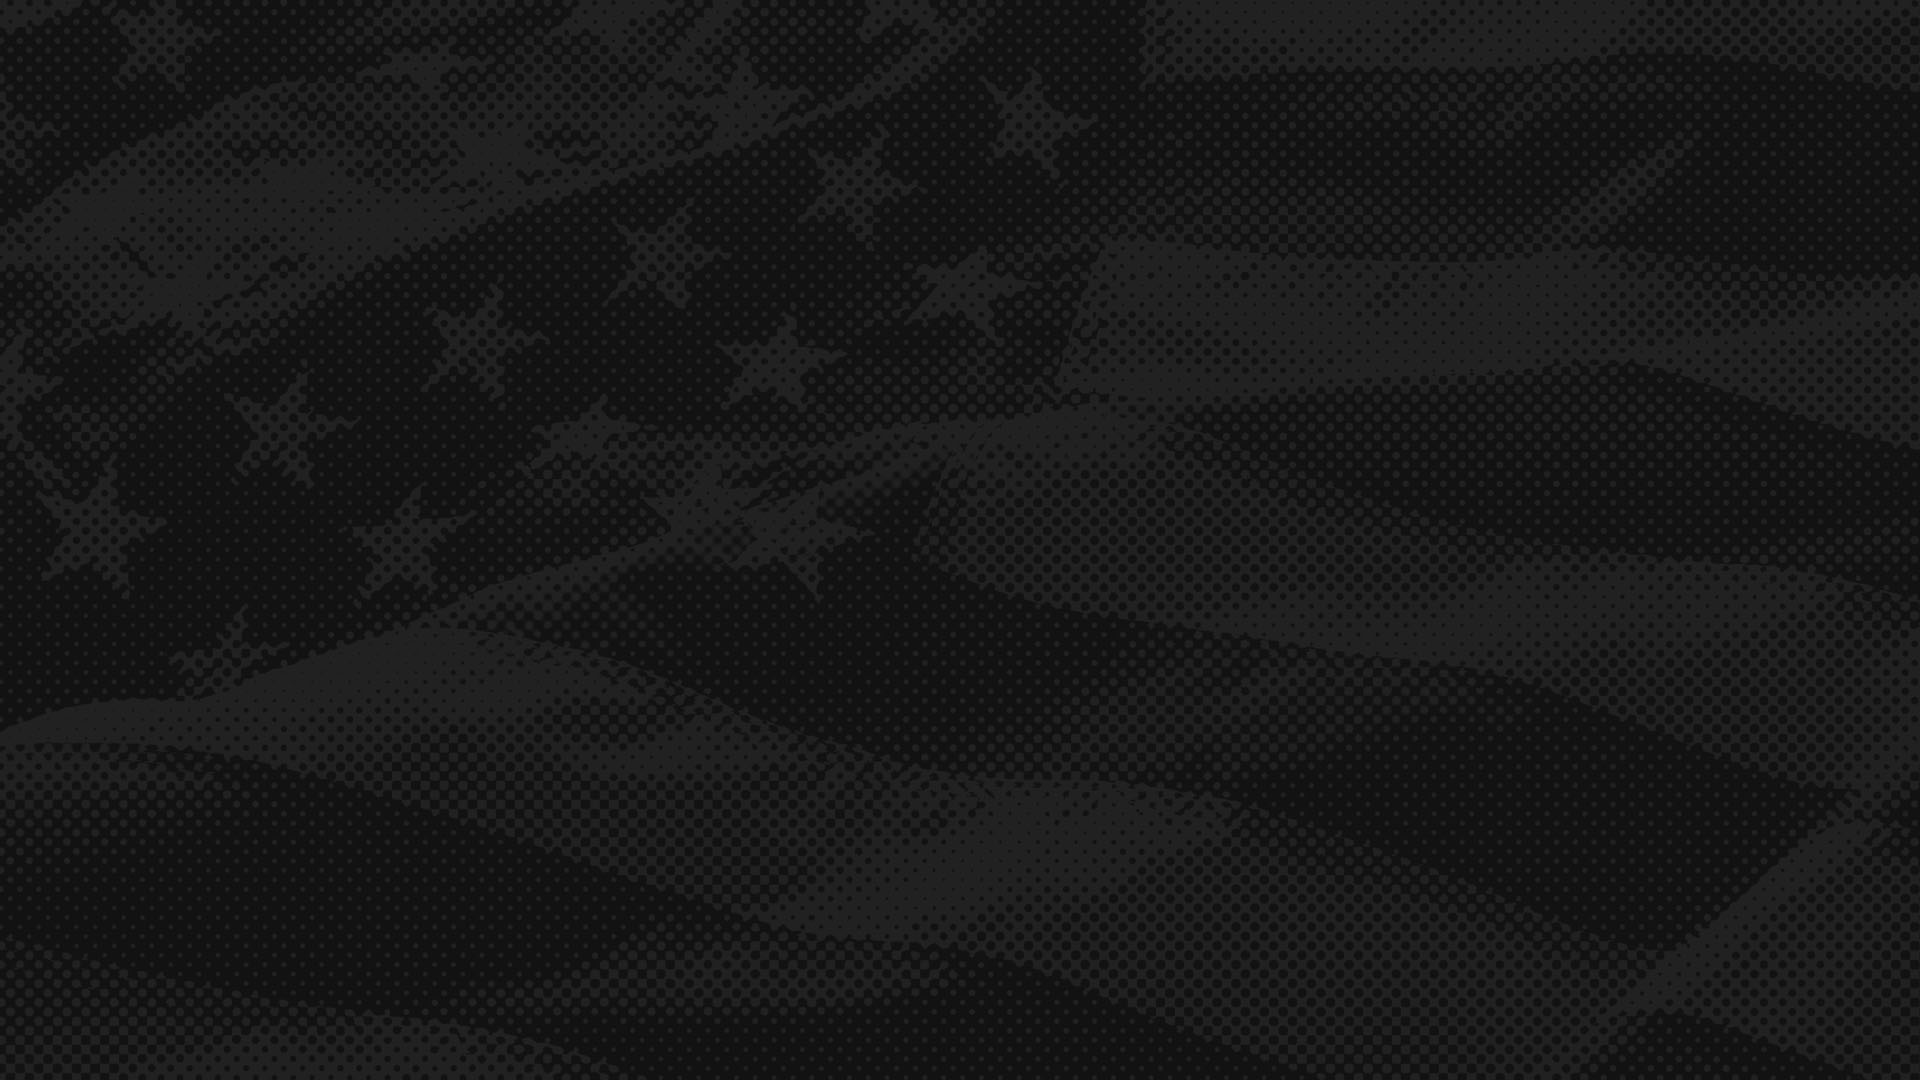 American flag stylized